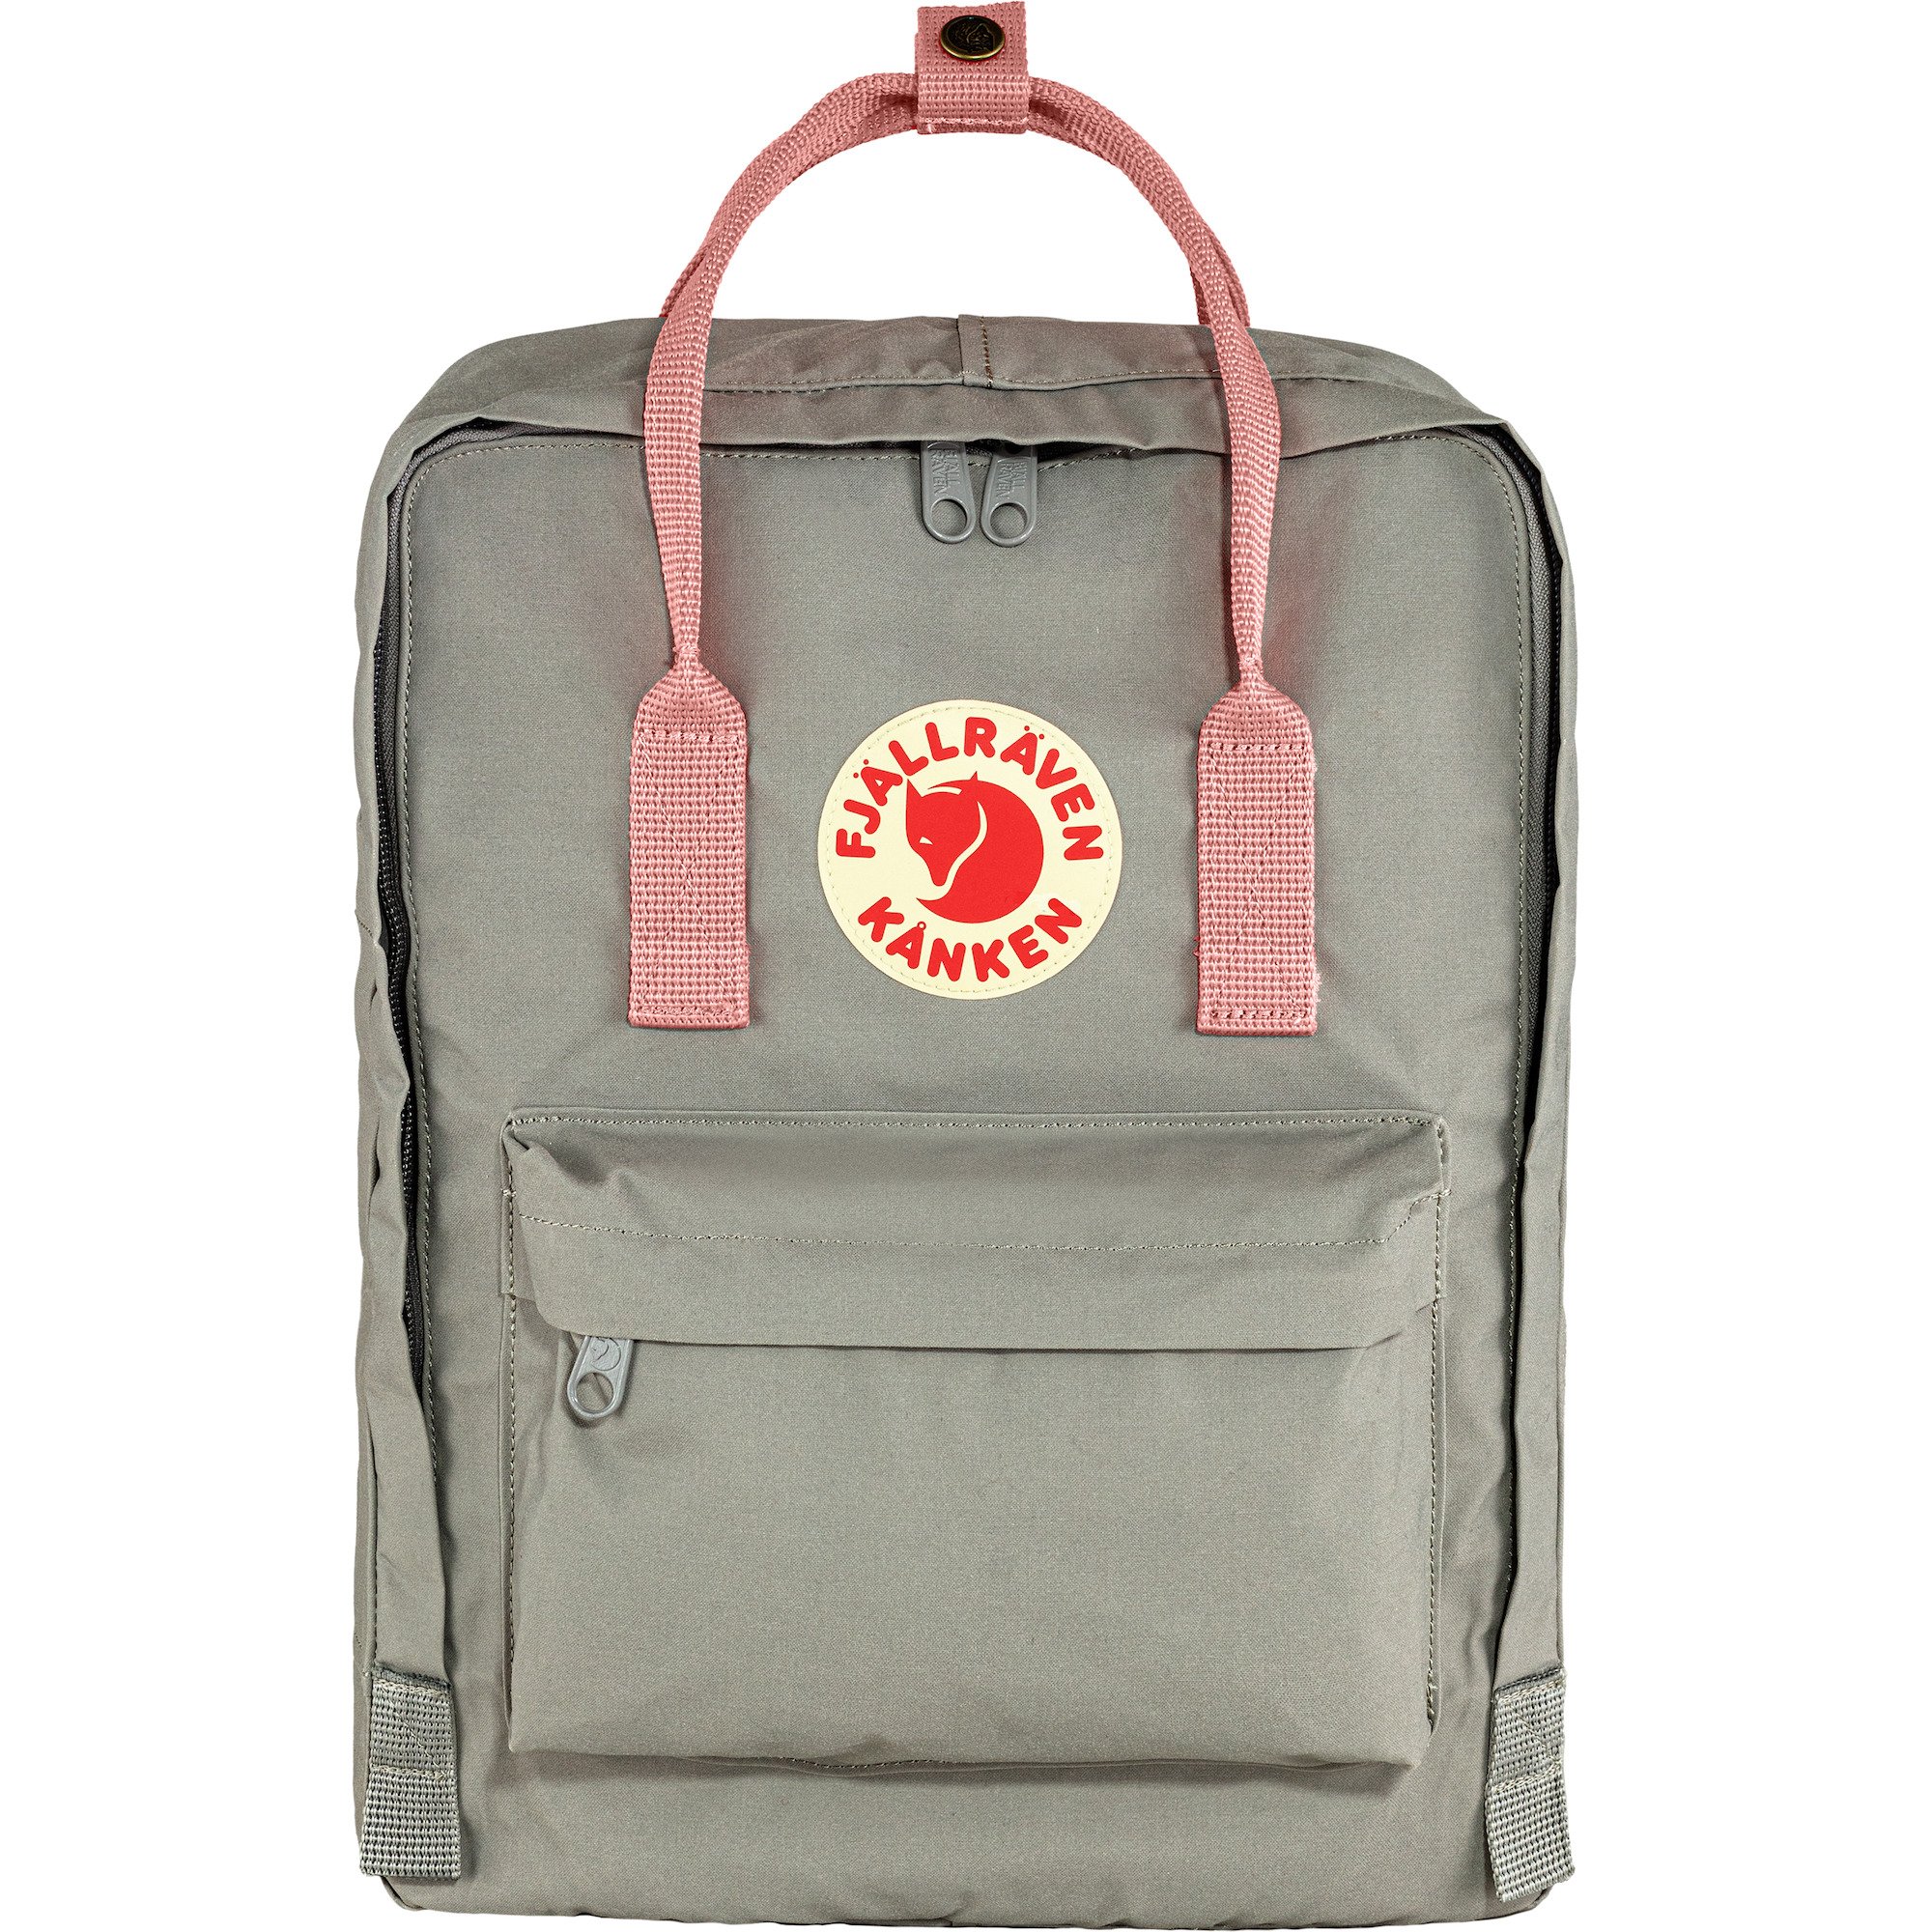 BRAND NEW Fjallraven Classic Kånken Backpack • Navy & Ox Red School Rucksack 16L 